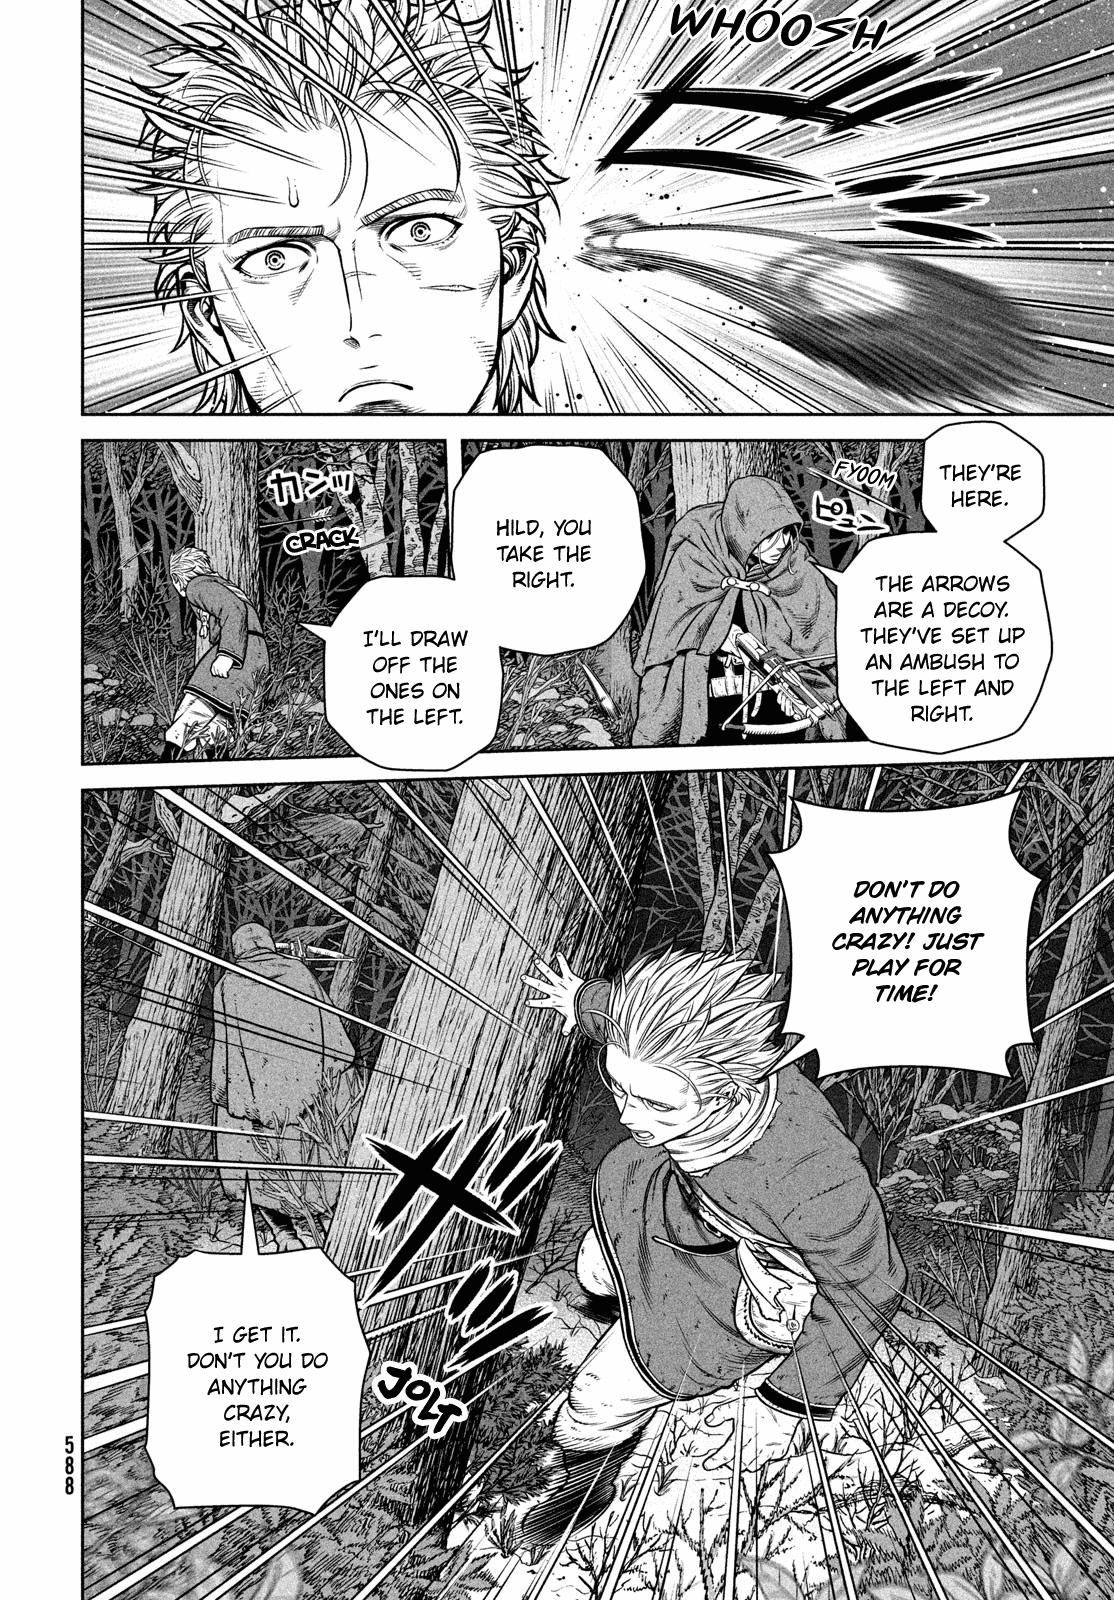 Vinland Saga Capítulo 15 - Manga Online